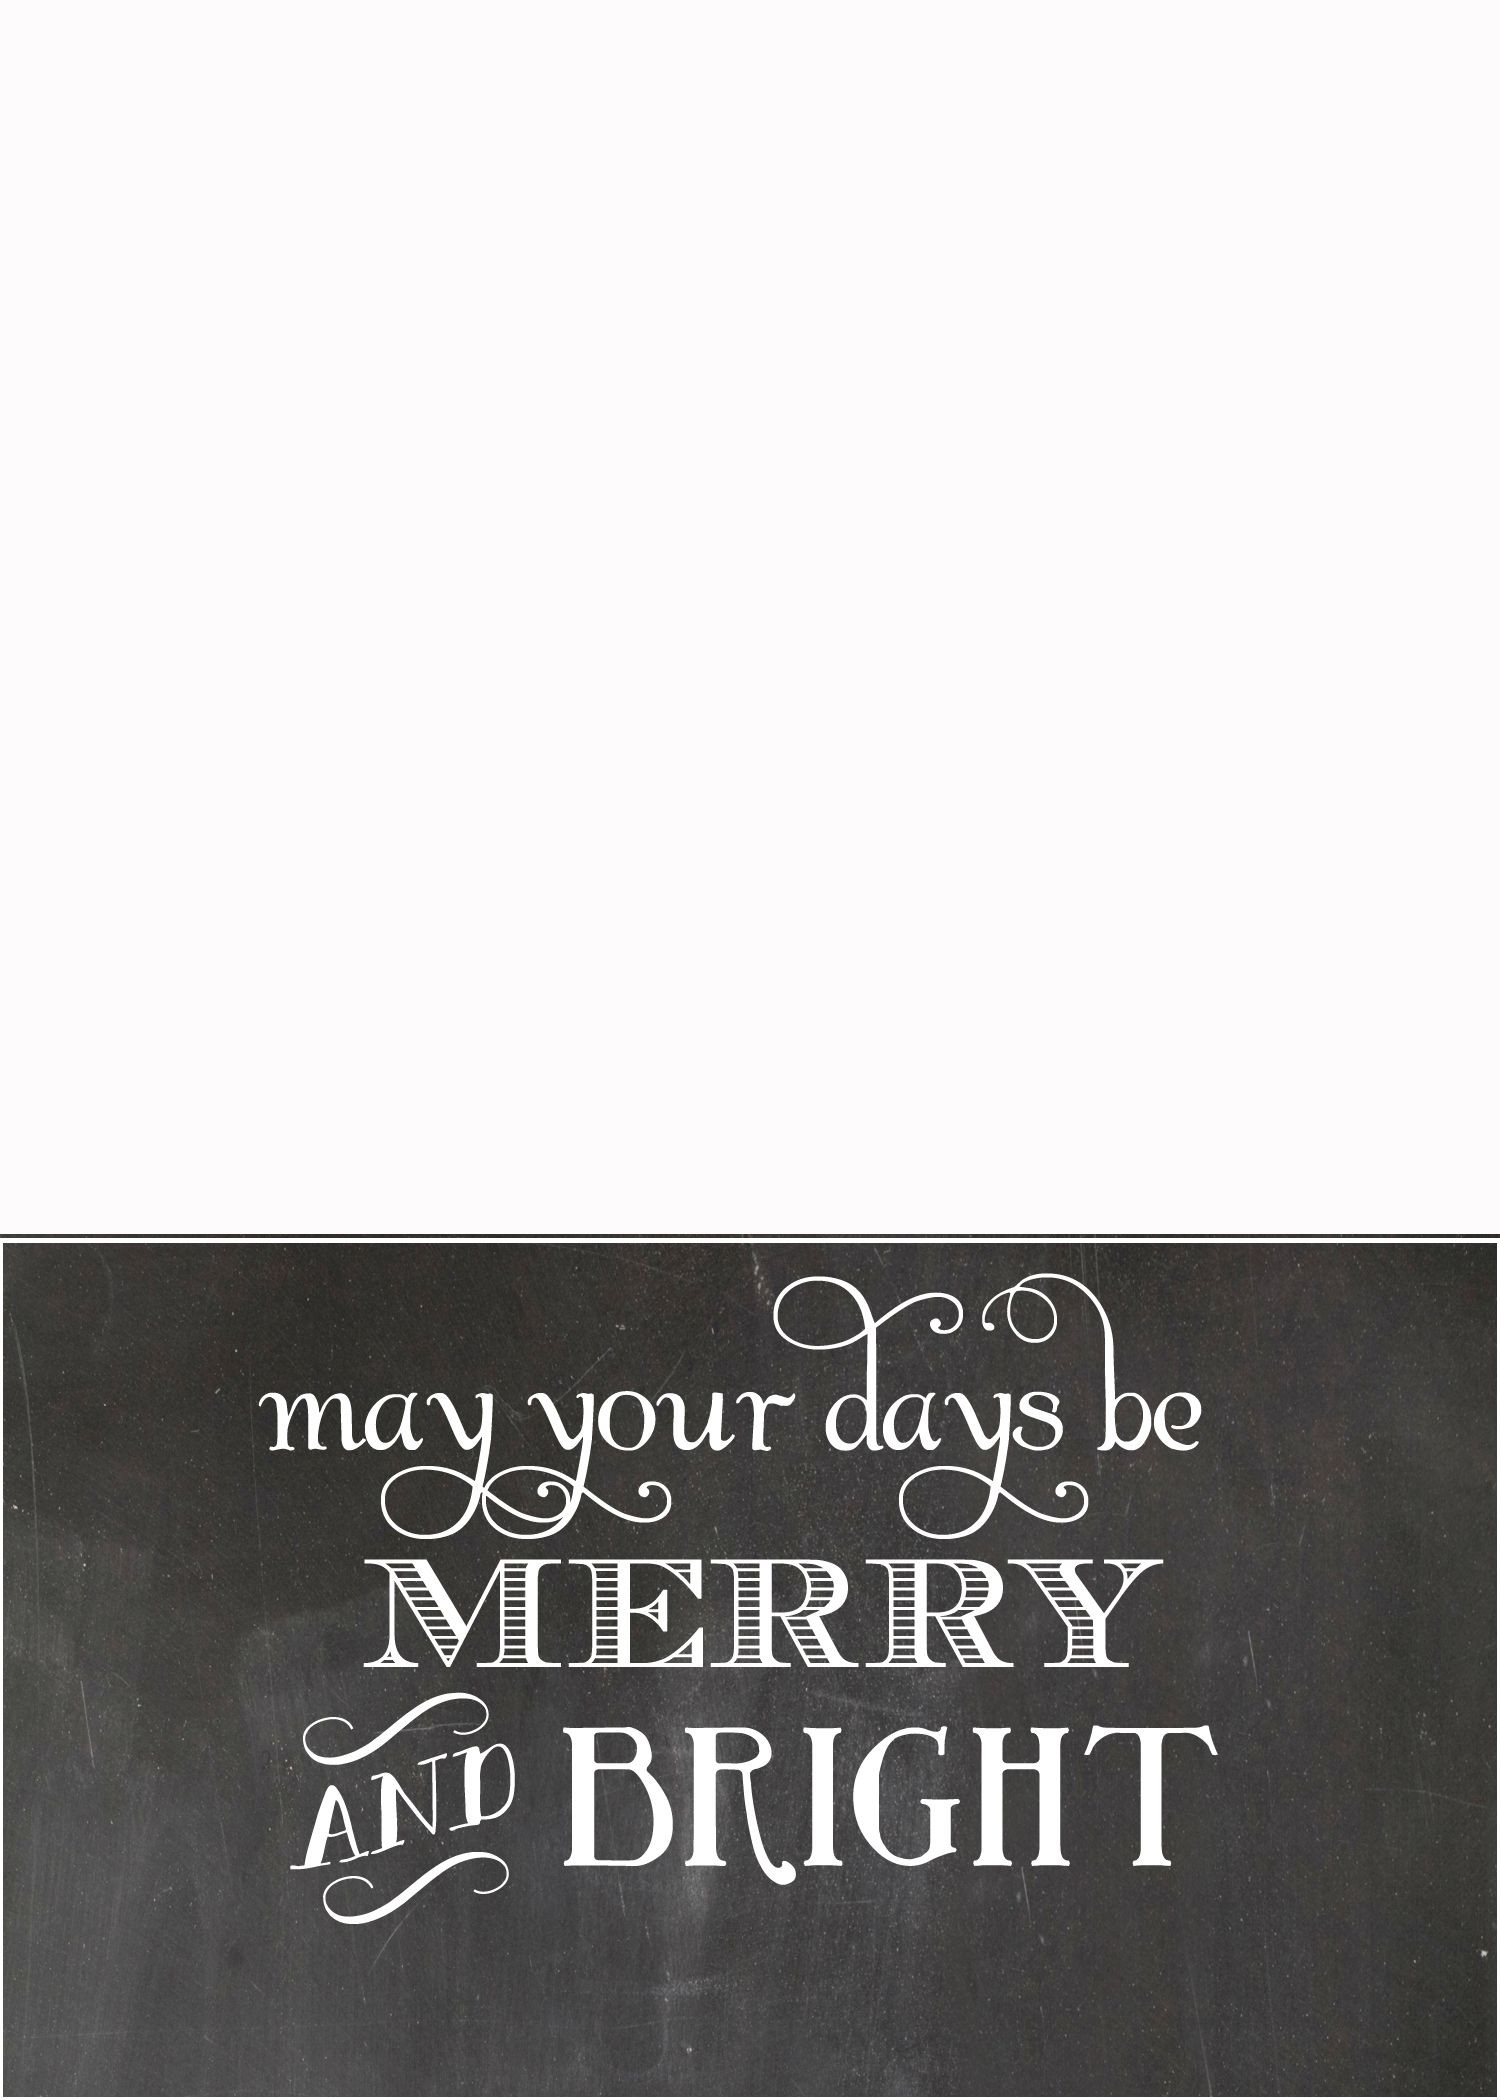 FREE Chalkboard Christmas Card Templates